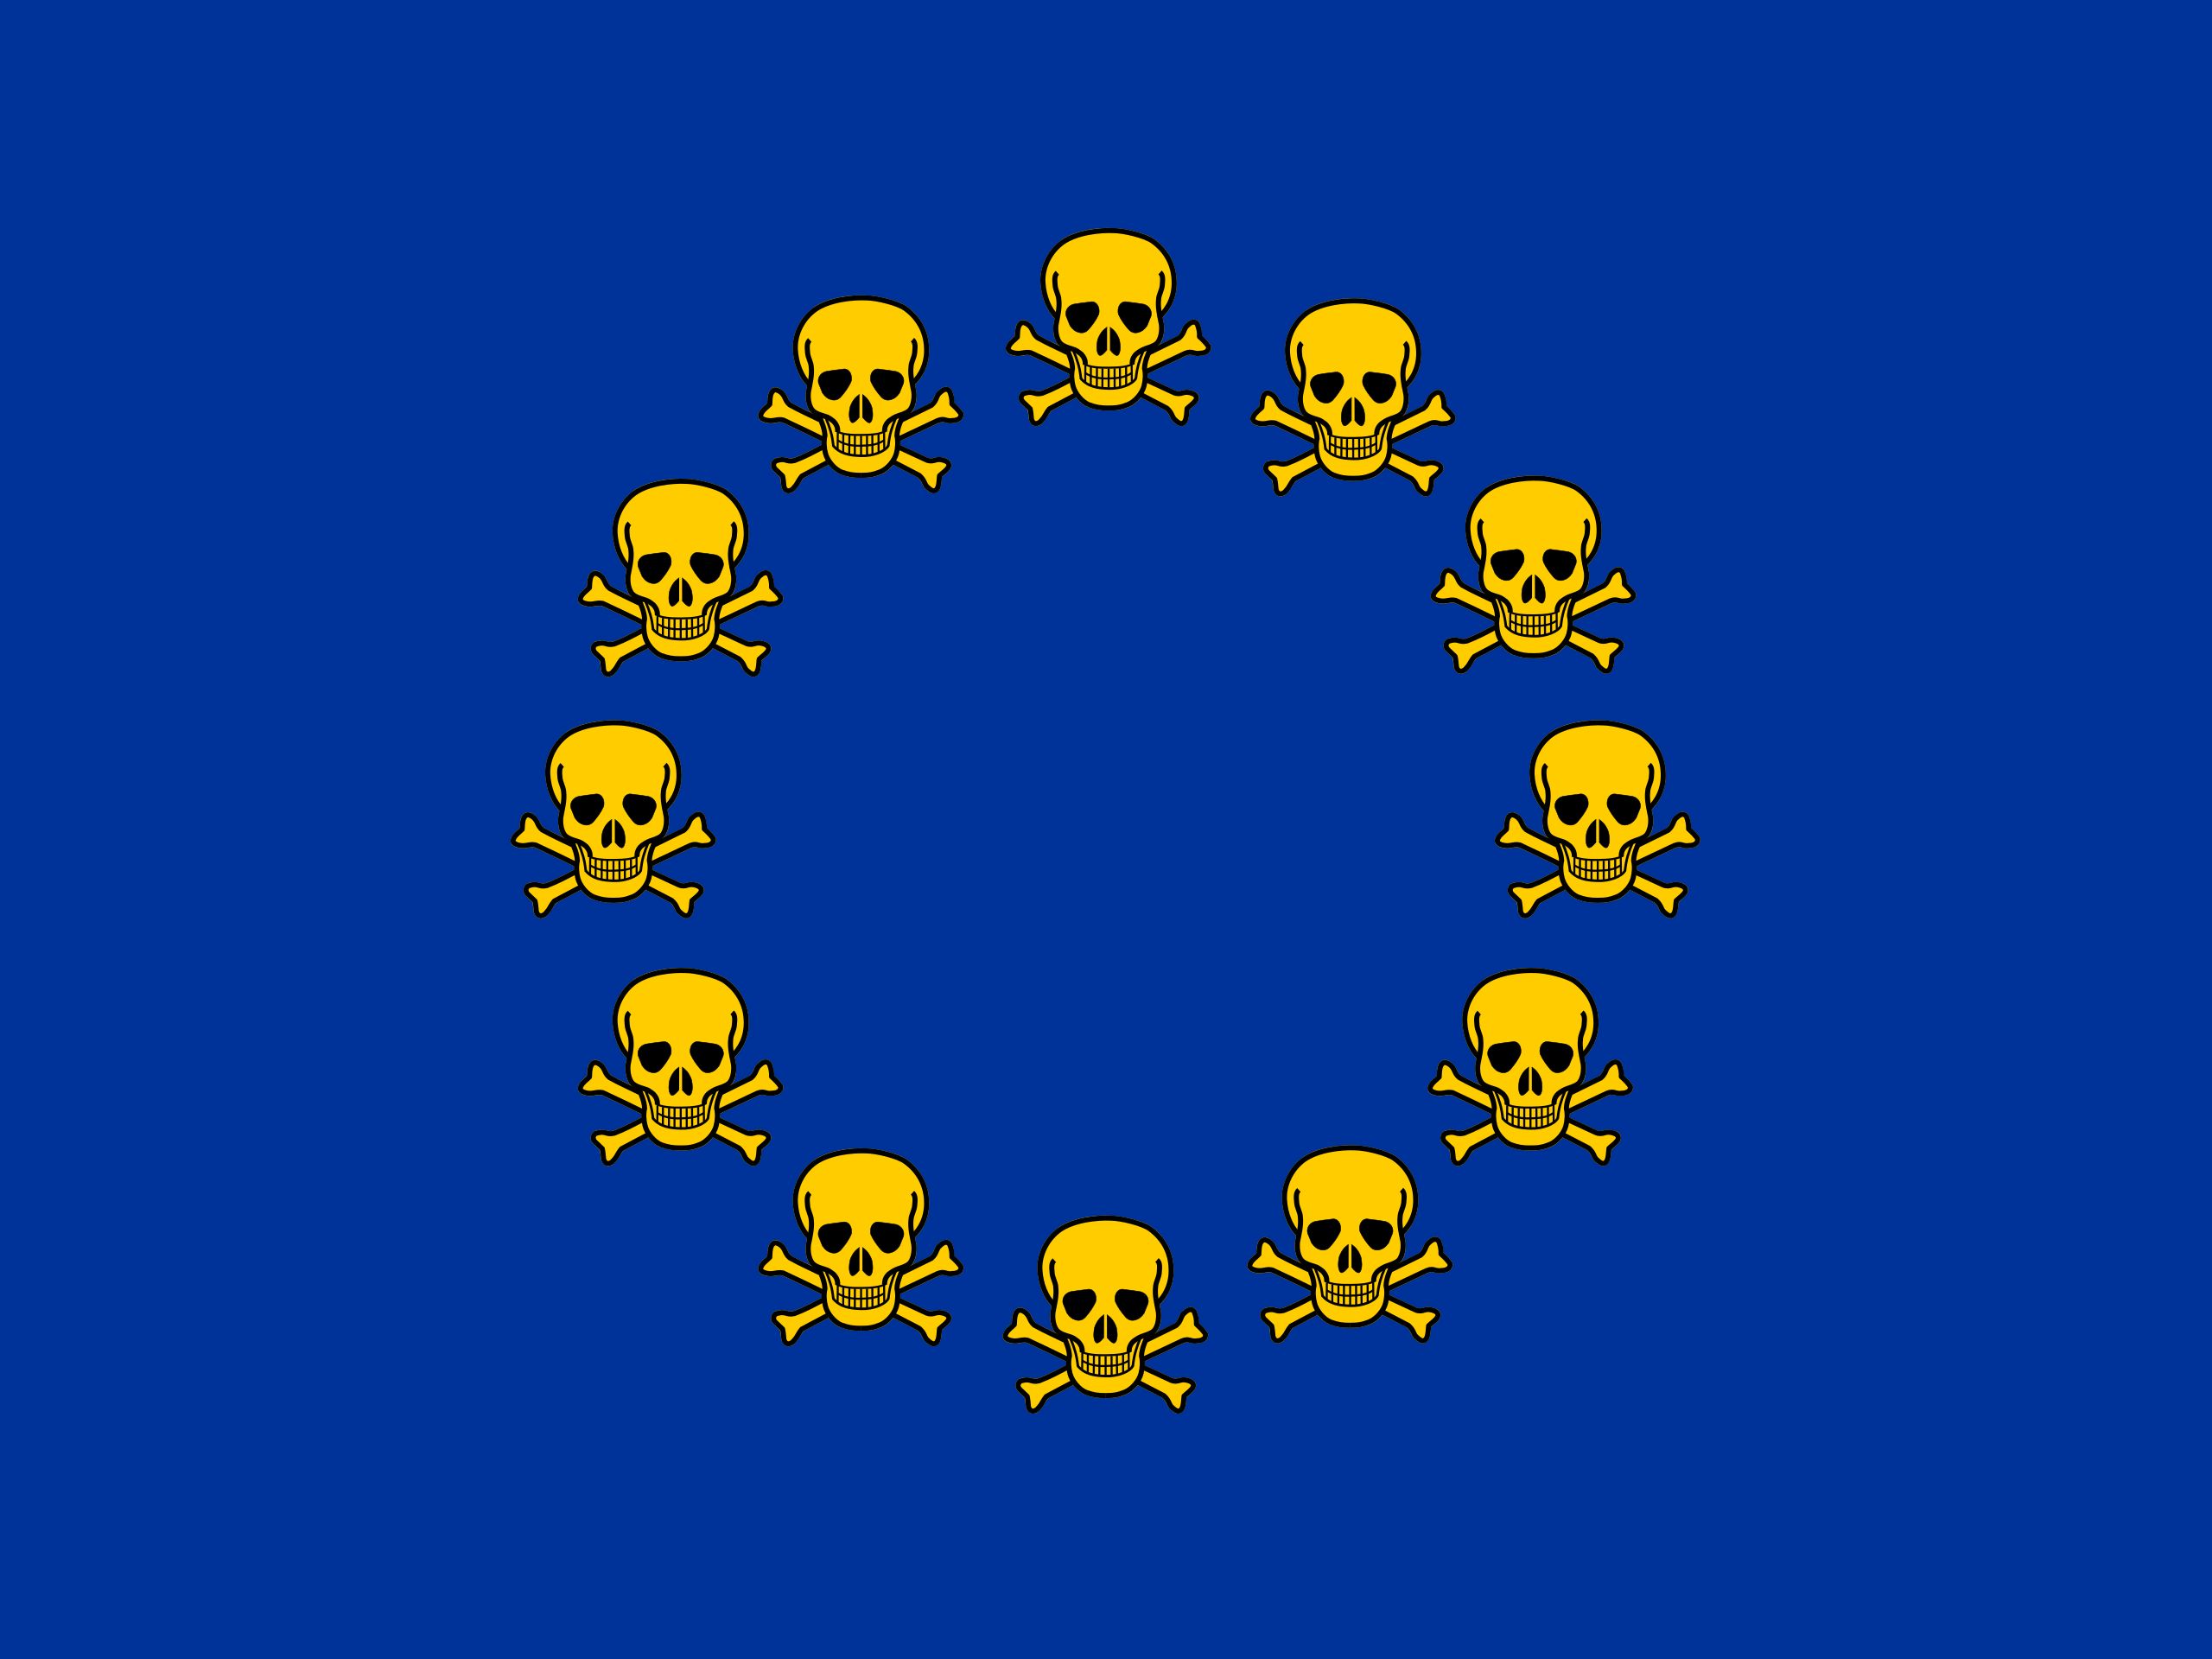 Tapeta, obrzek Evropsk unie - 2560x1920 px. Wallpaper na plochu PC zdarma